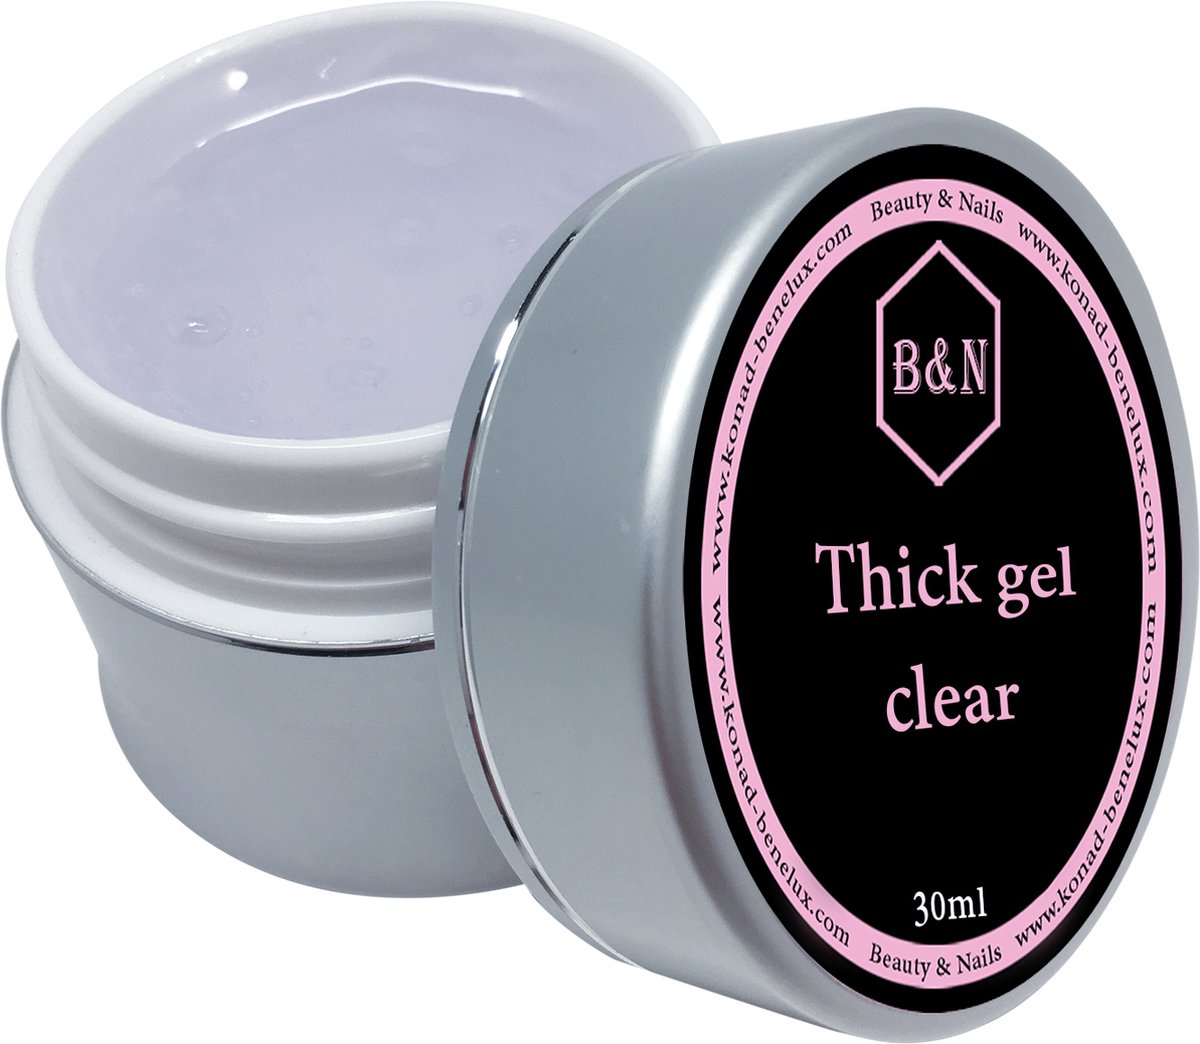 Thick gel clear - 30 ml | B&N